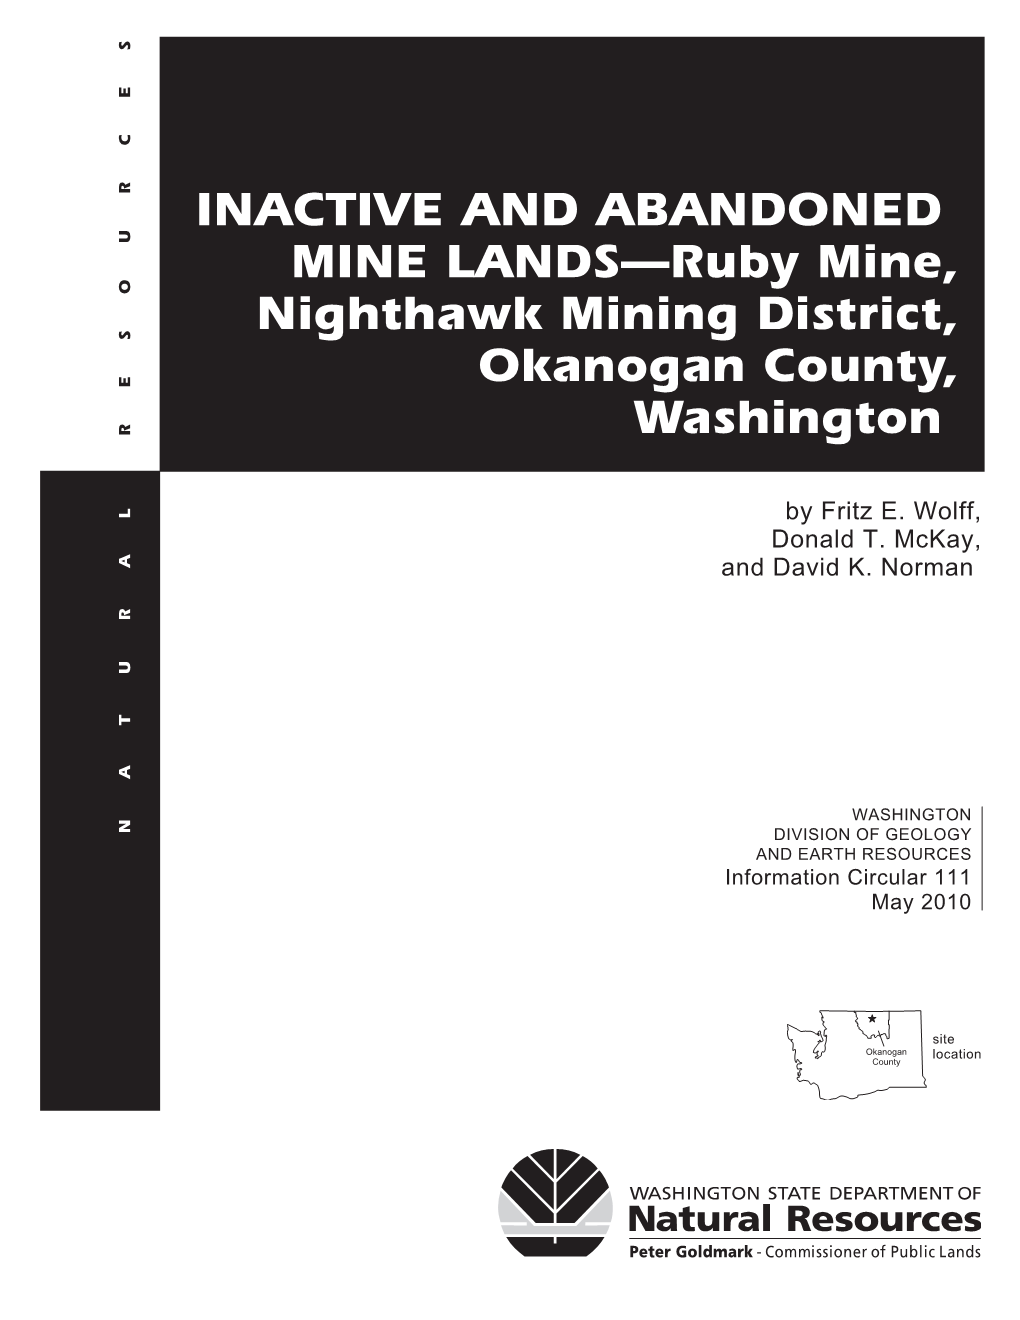 Information Circular 111. Inactive and Abandoned Mine Lands—Ruby Mine, Nighthawk Mining District, Okanogan County, Washington